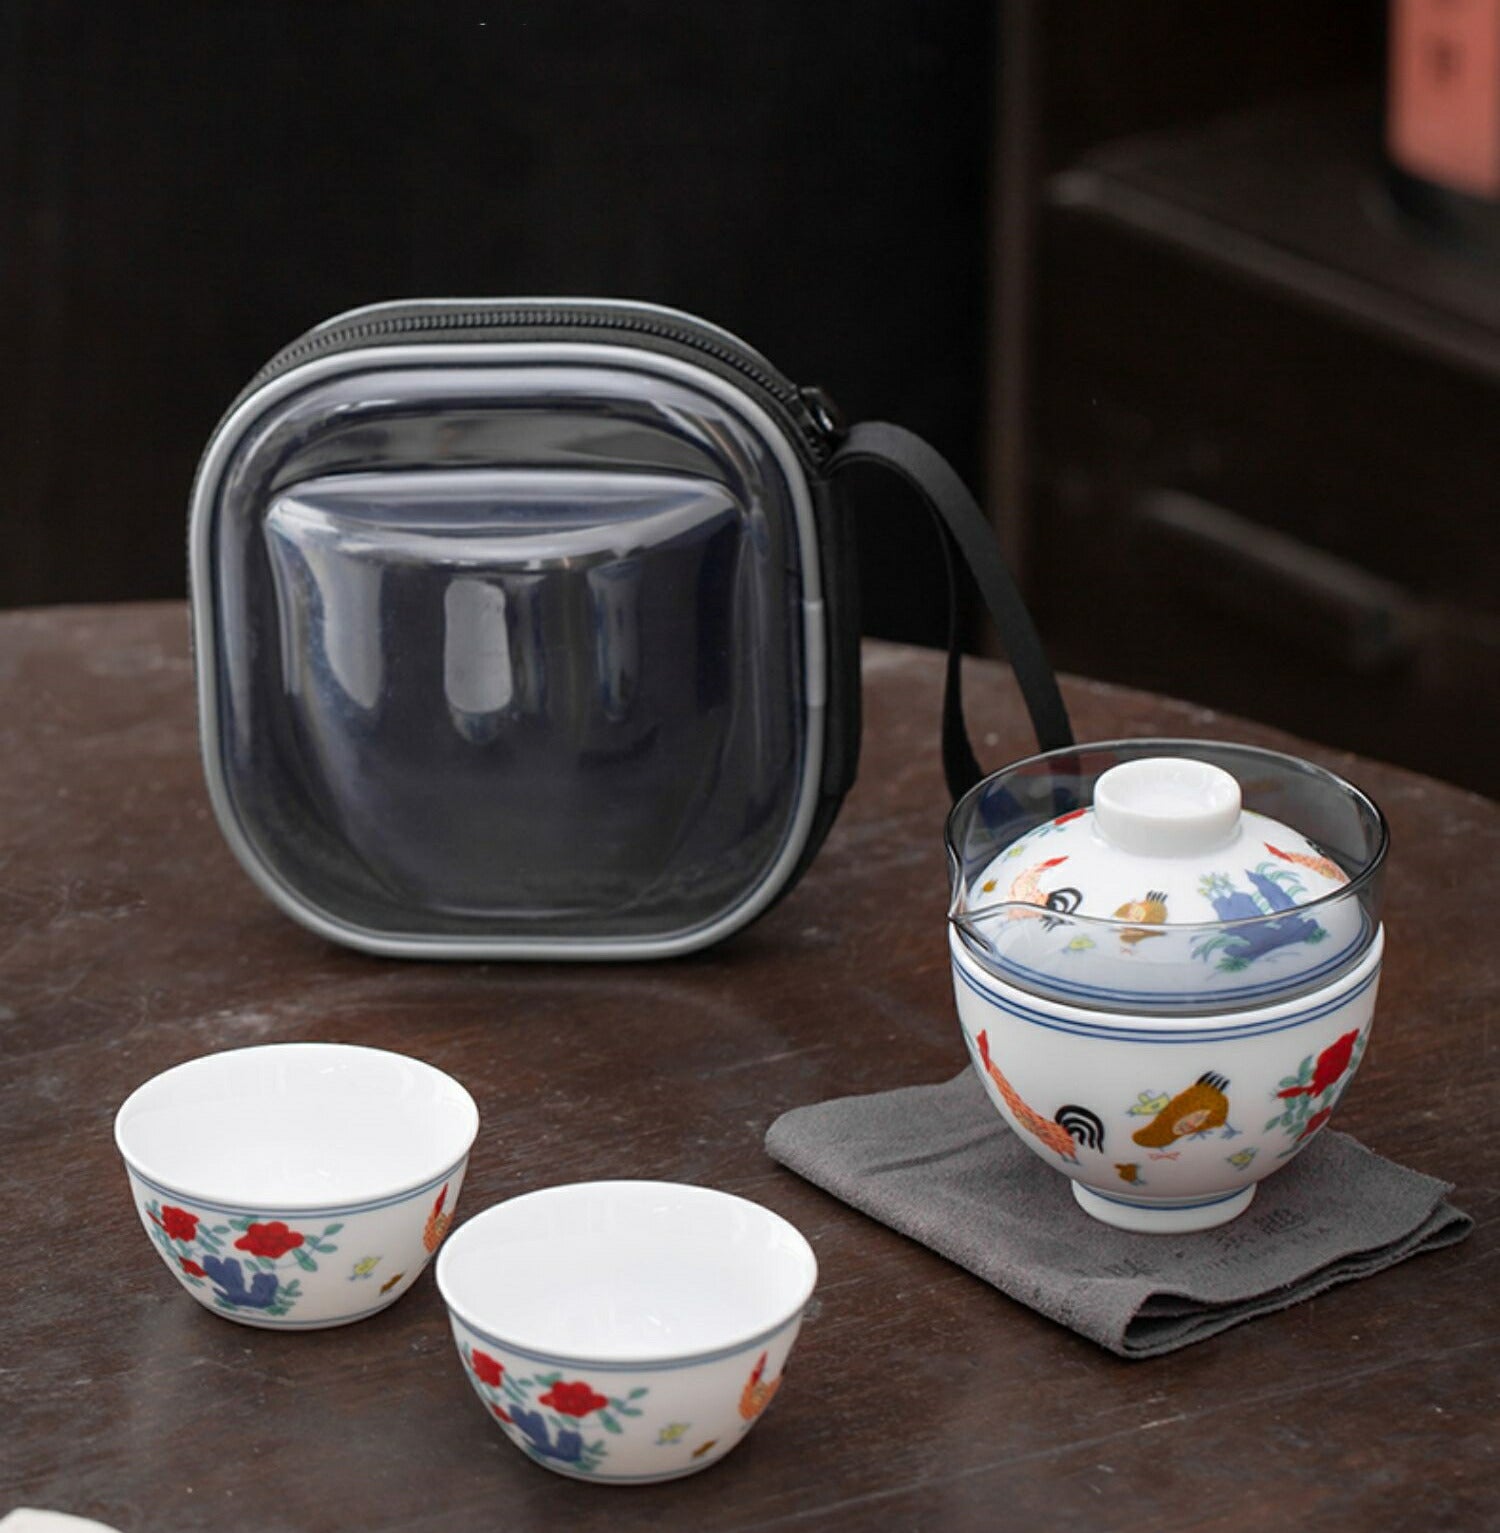 IwaiLoft 鶏 2客 茶器セット 宝瓶 蓋碗 ガラス サーバー 湯冷まし 品茗杯 茶杯 湯吞み 小 白磁 茶器 磁器 ホワイト 白い食 –  茶器・コーヒー用品を選ぶ - IwaiLoft